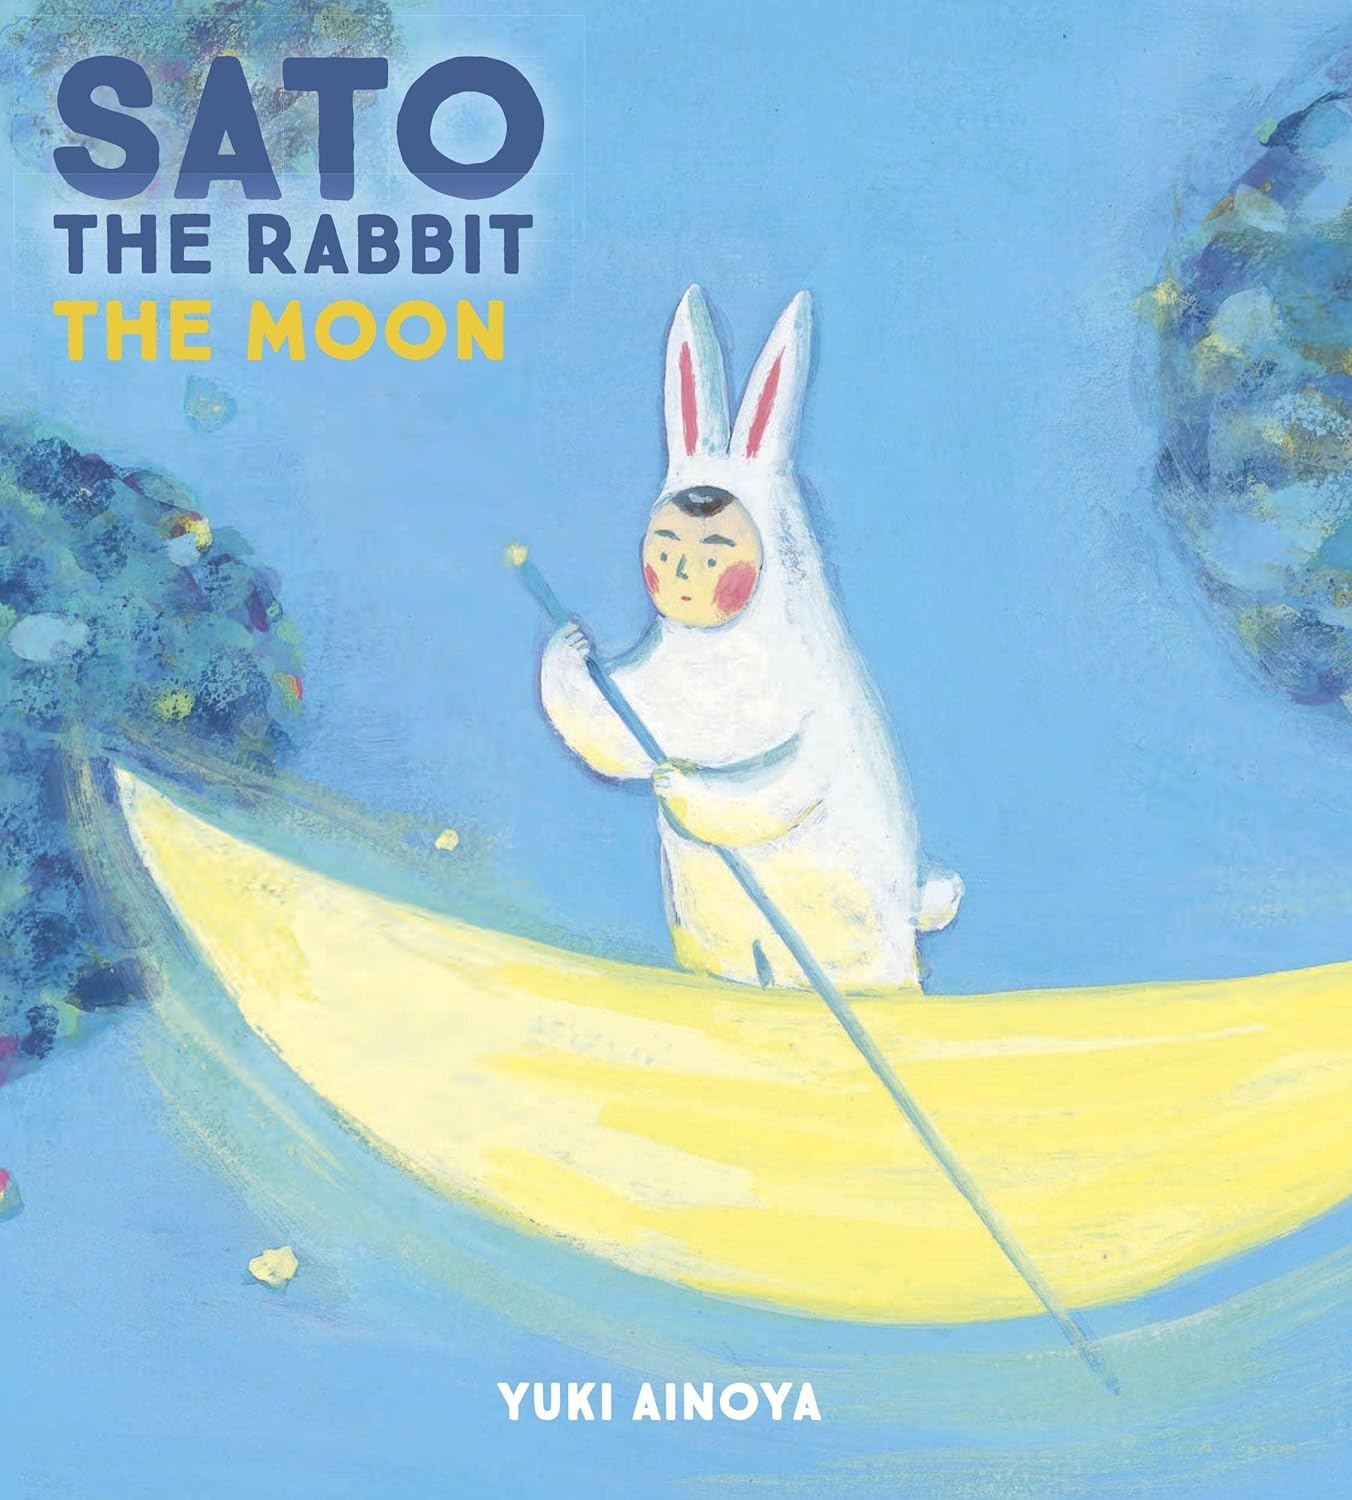 Image of "Sato the Rabbit: The Moon"